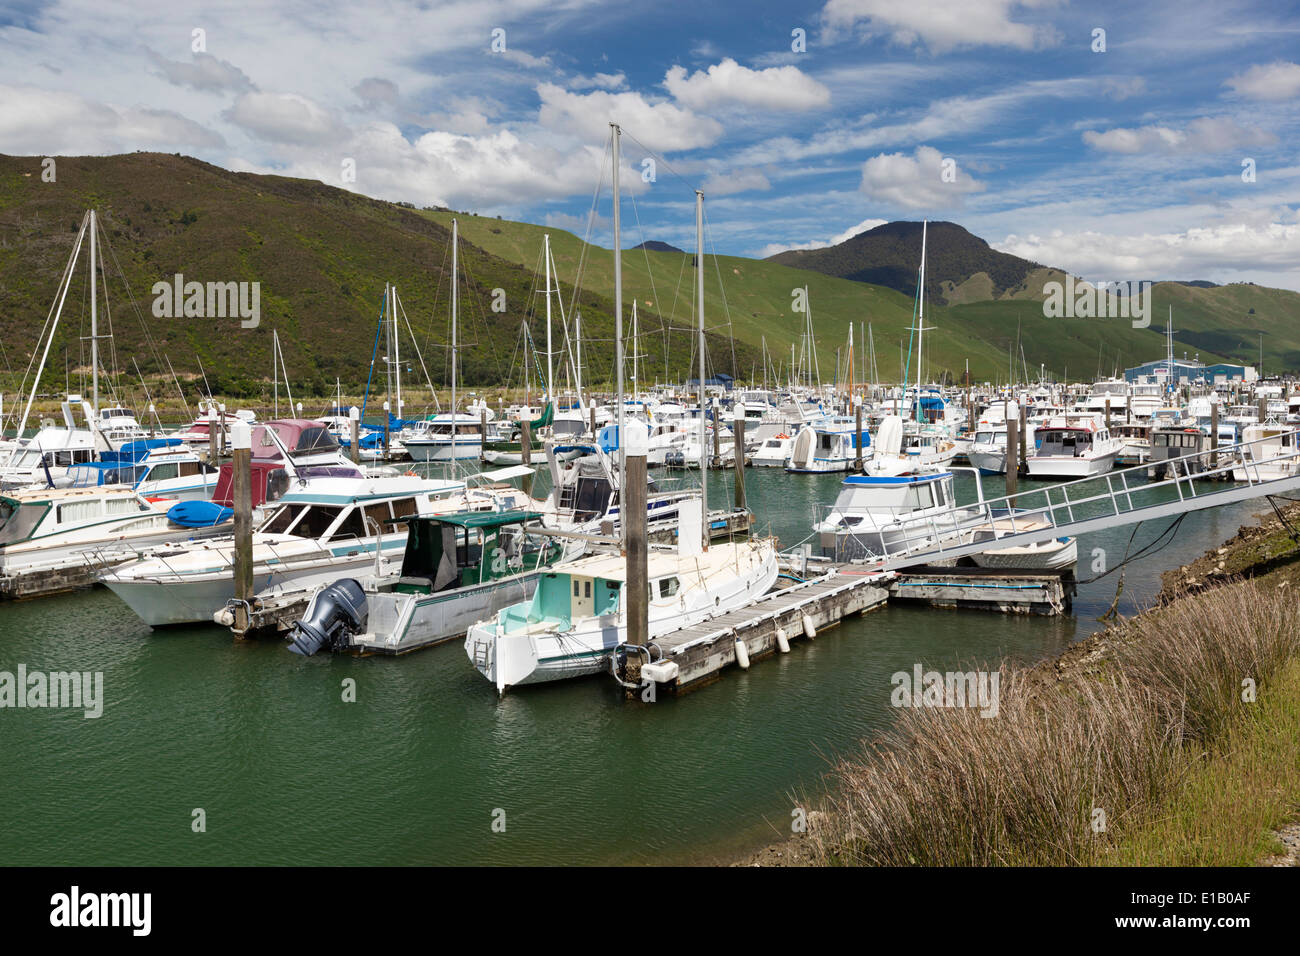 Havelock marina, Havelock, Marlborough region, South Island, New Zealand, South Pacific Stock Photo